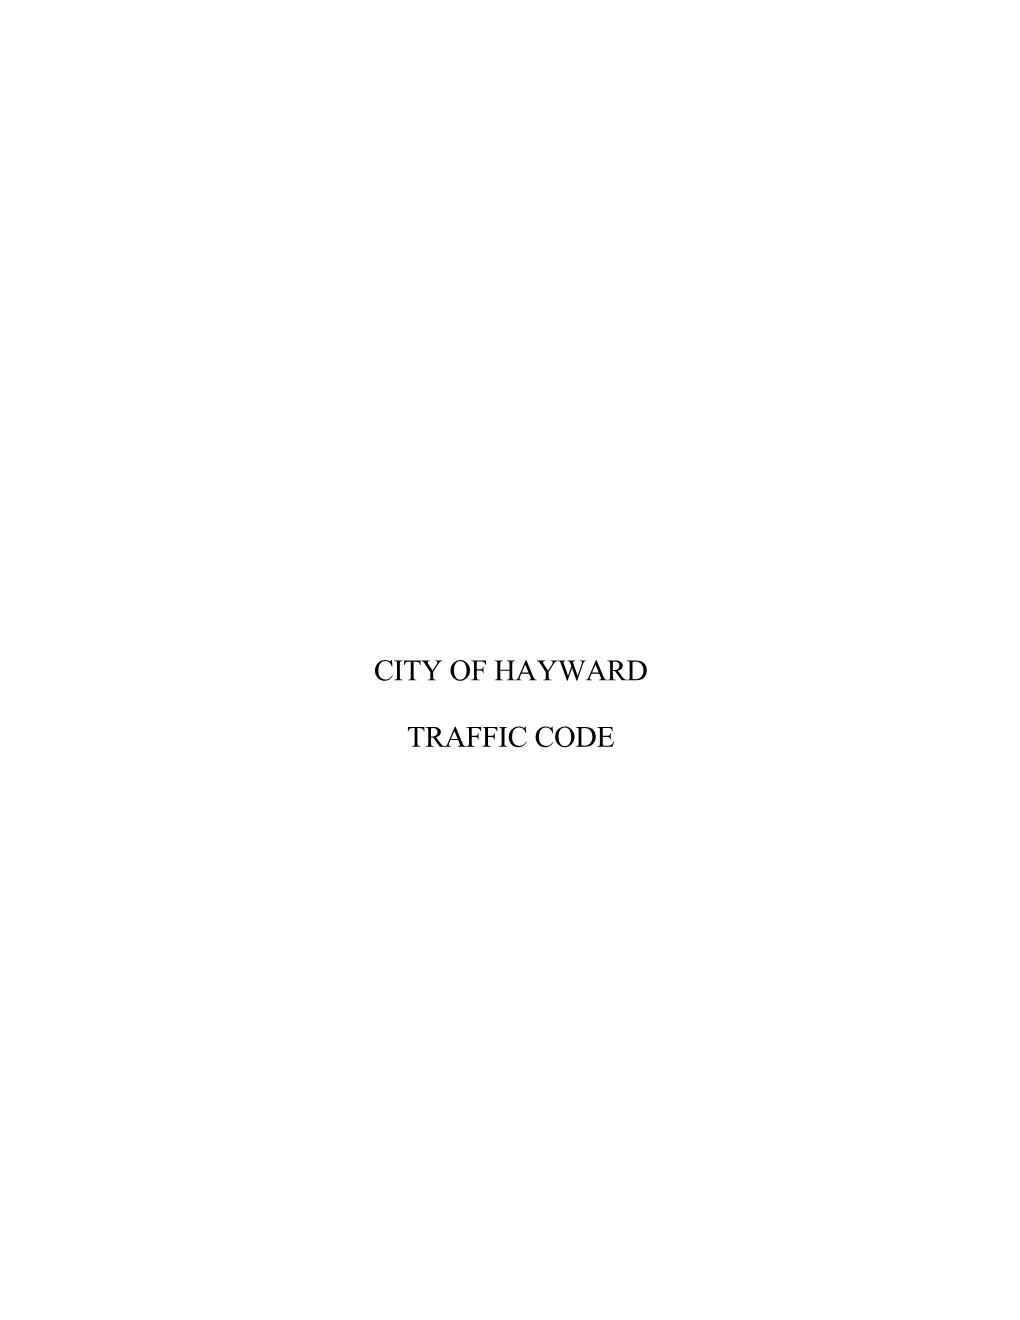 City of Hayward Traffic Code